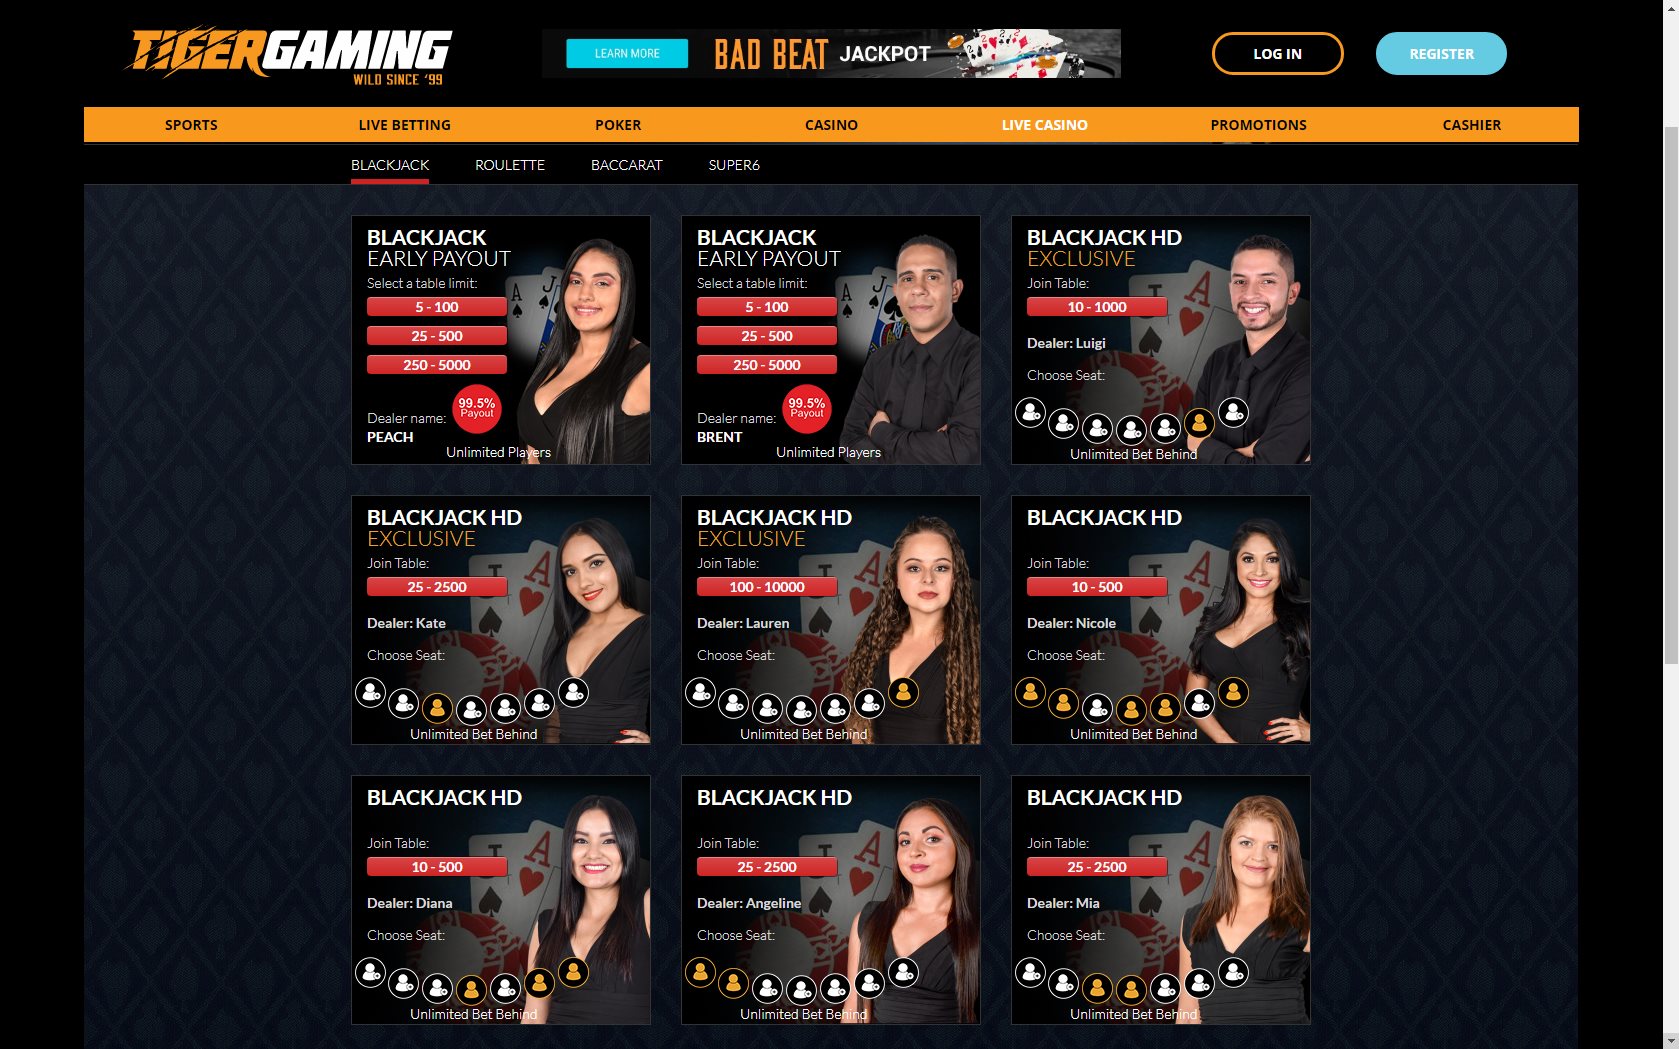 TigerGaming Casino Live Dealer Games